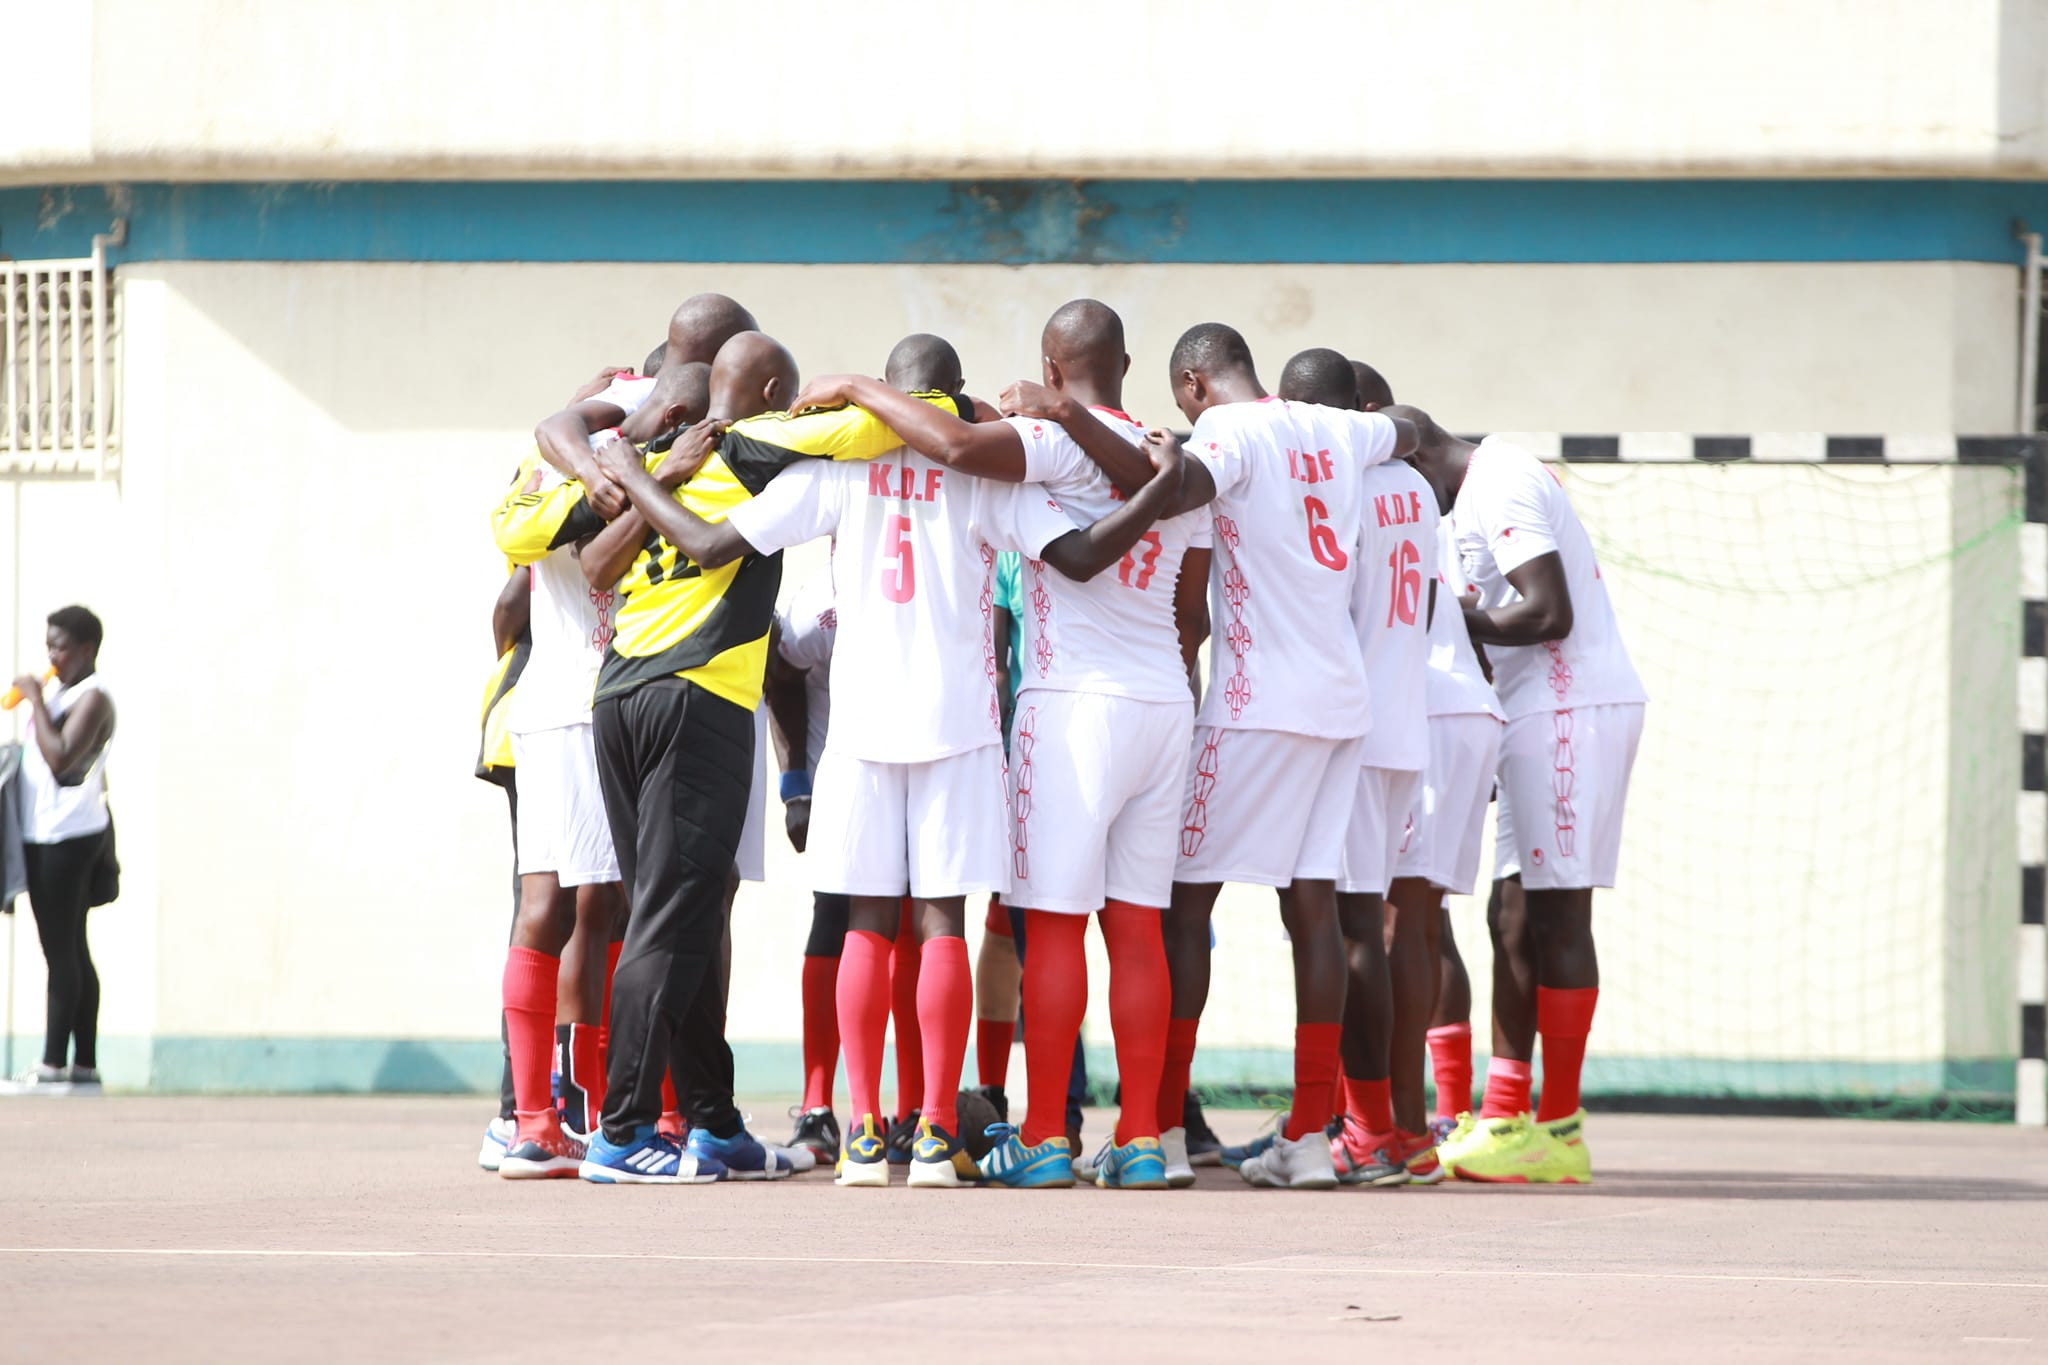 The KHF want to improve the quality of handball in Kenya ©Kenya Handball Federation